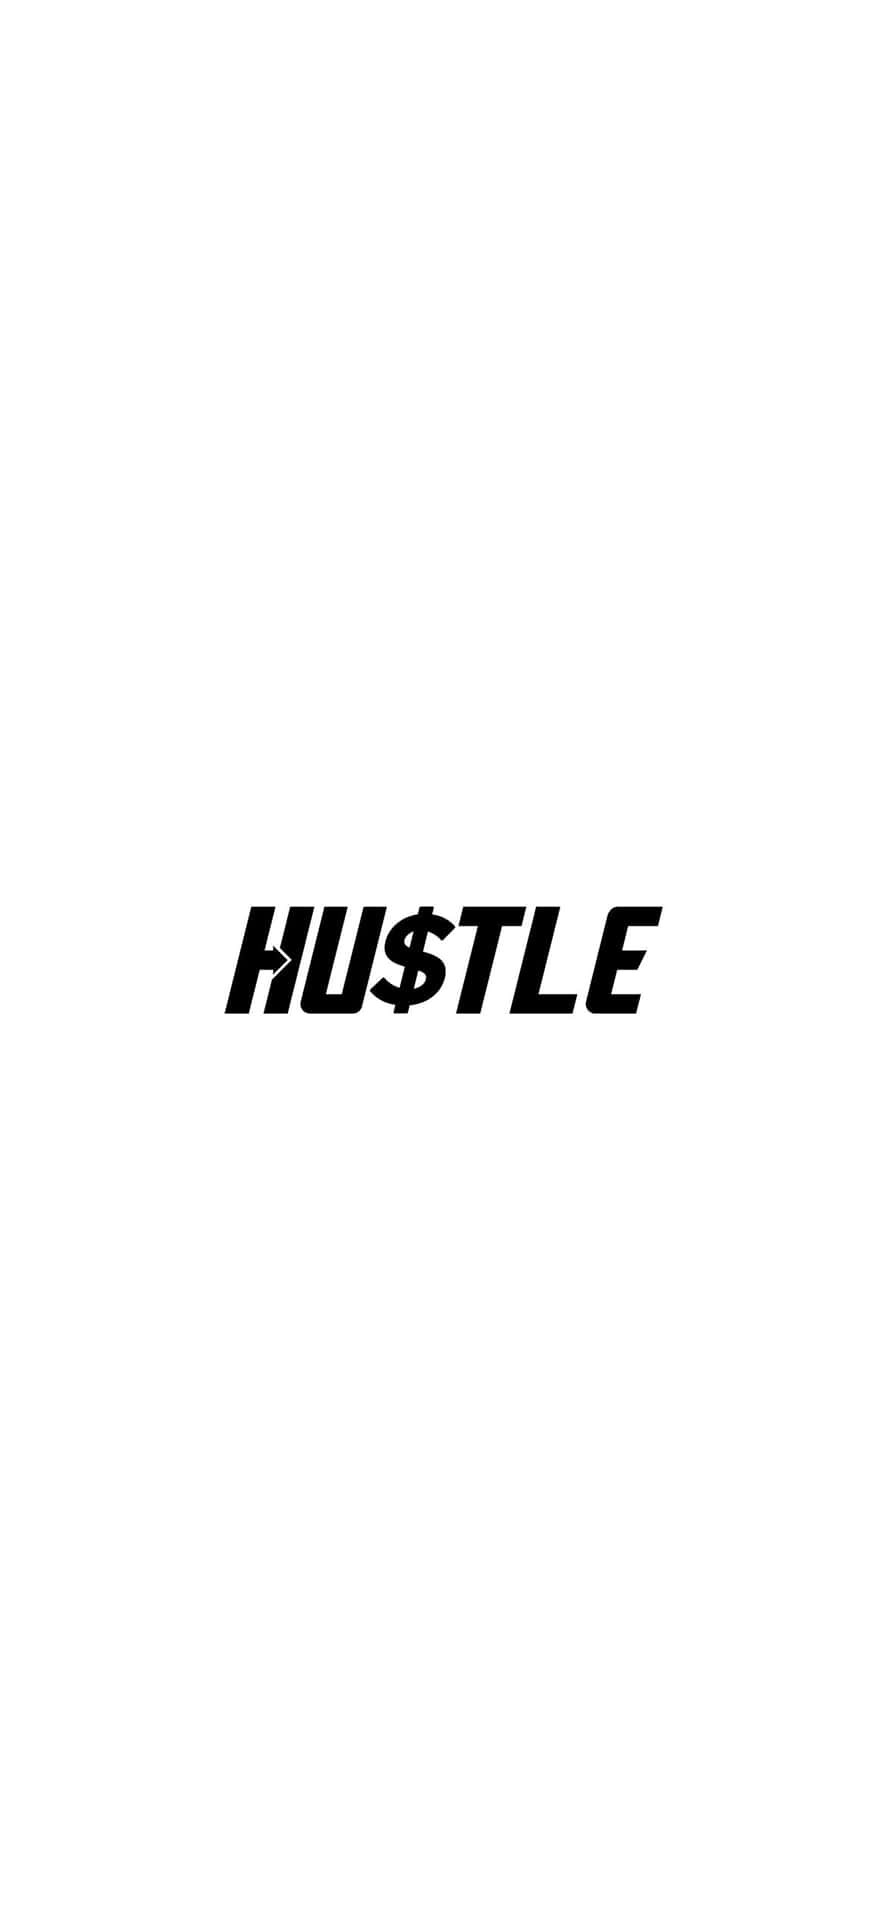 Free Hustle Wallpaper, Hustle Wallpaper Download - WallpaperUse - 1